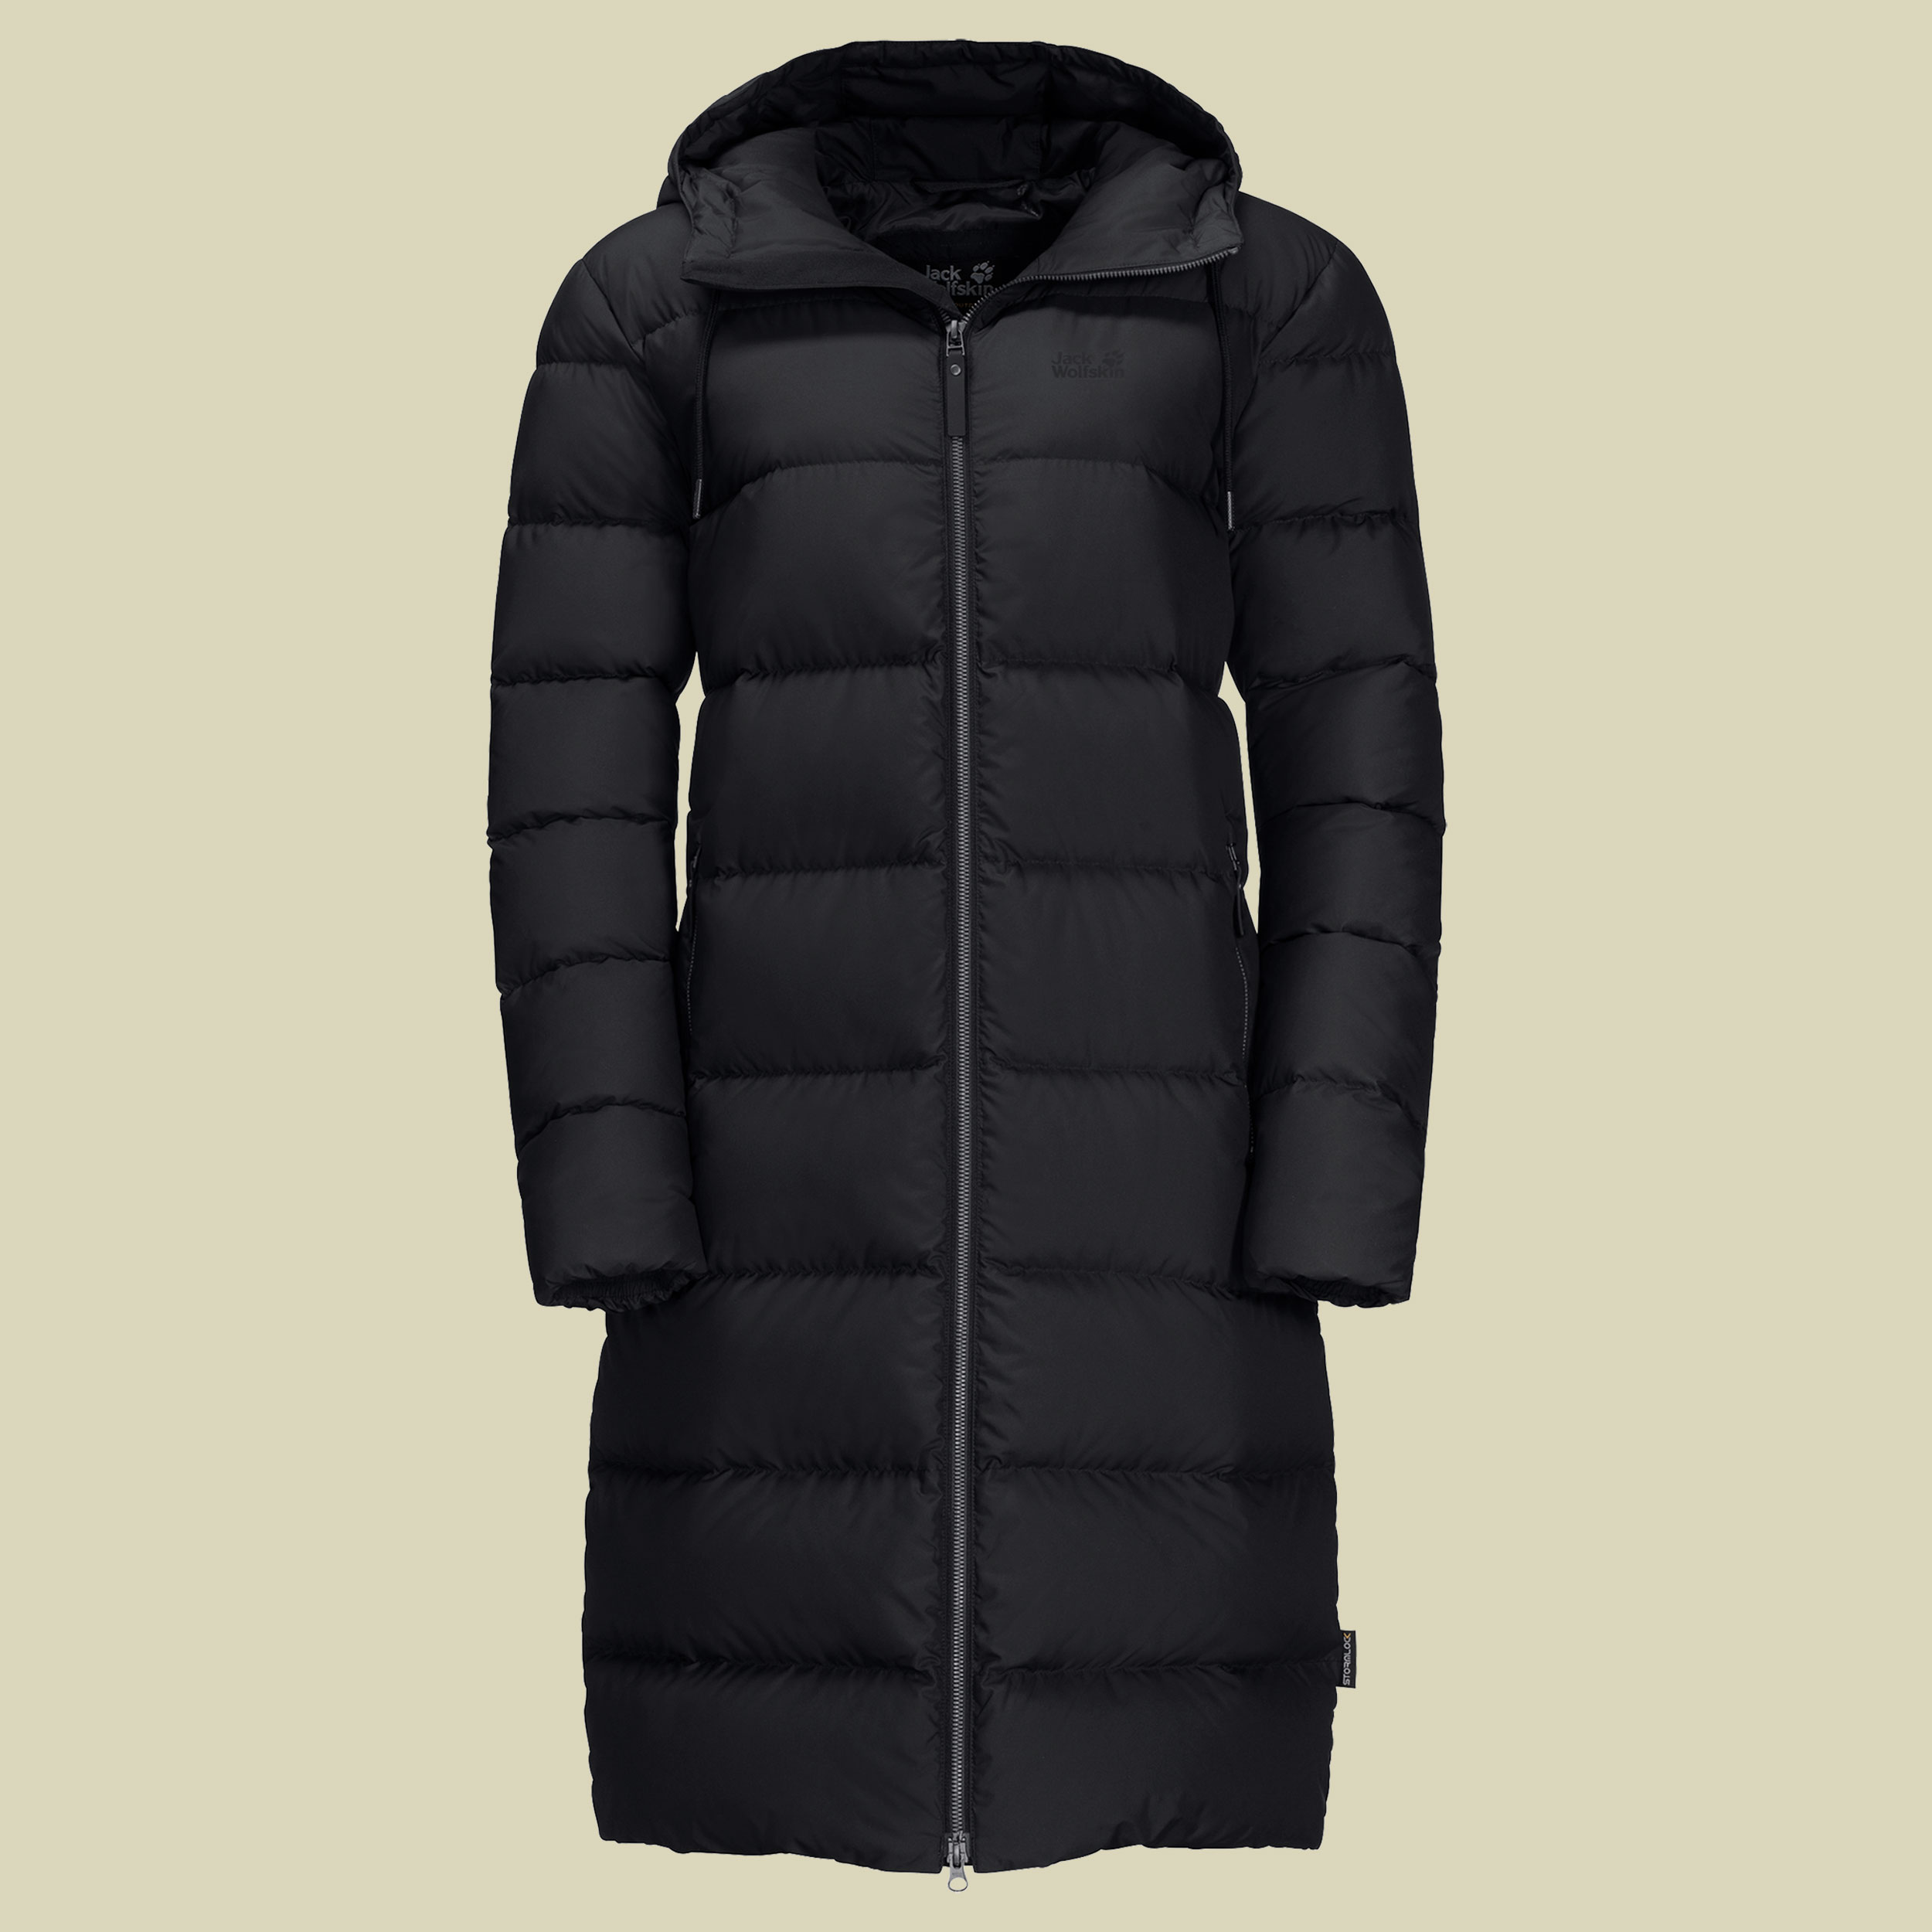 Crystal Palace Coat Women Größe S Farbe black